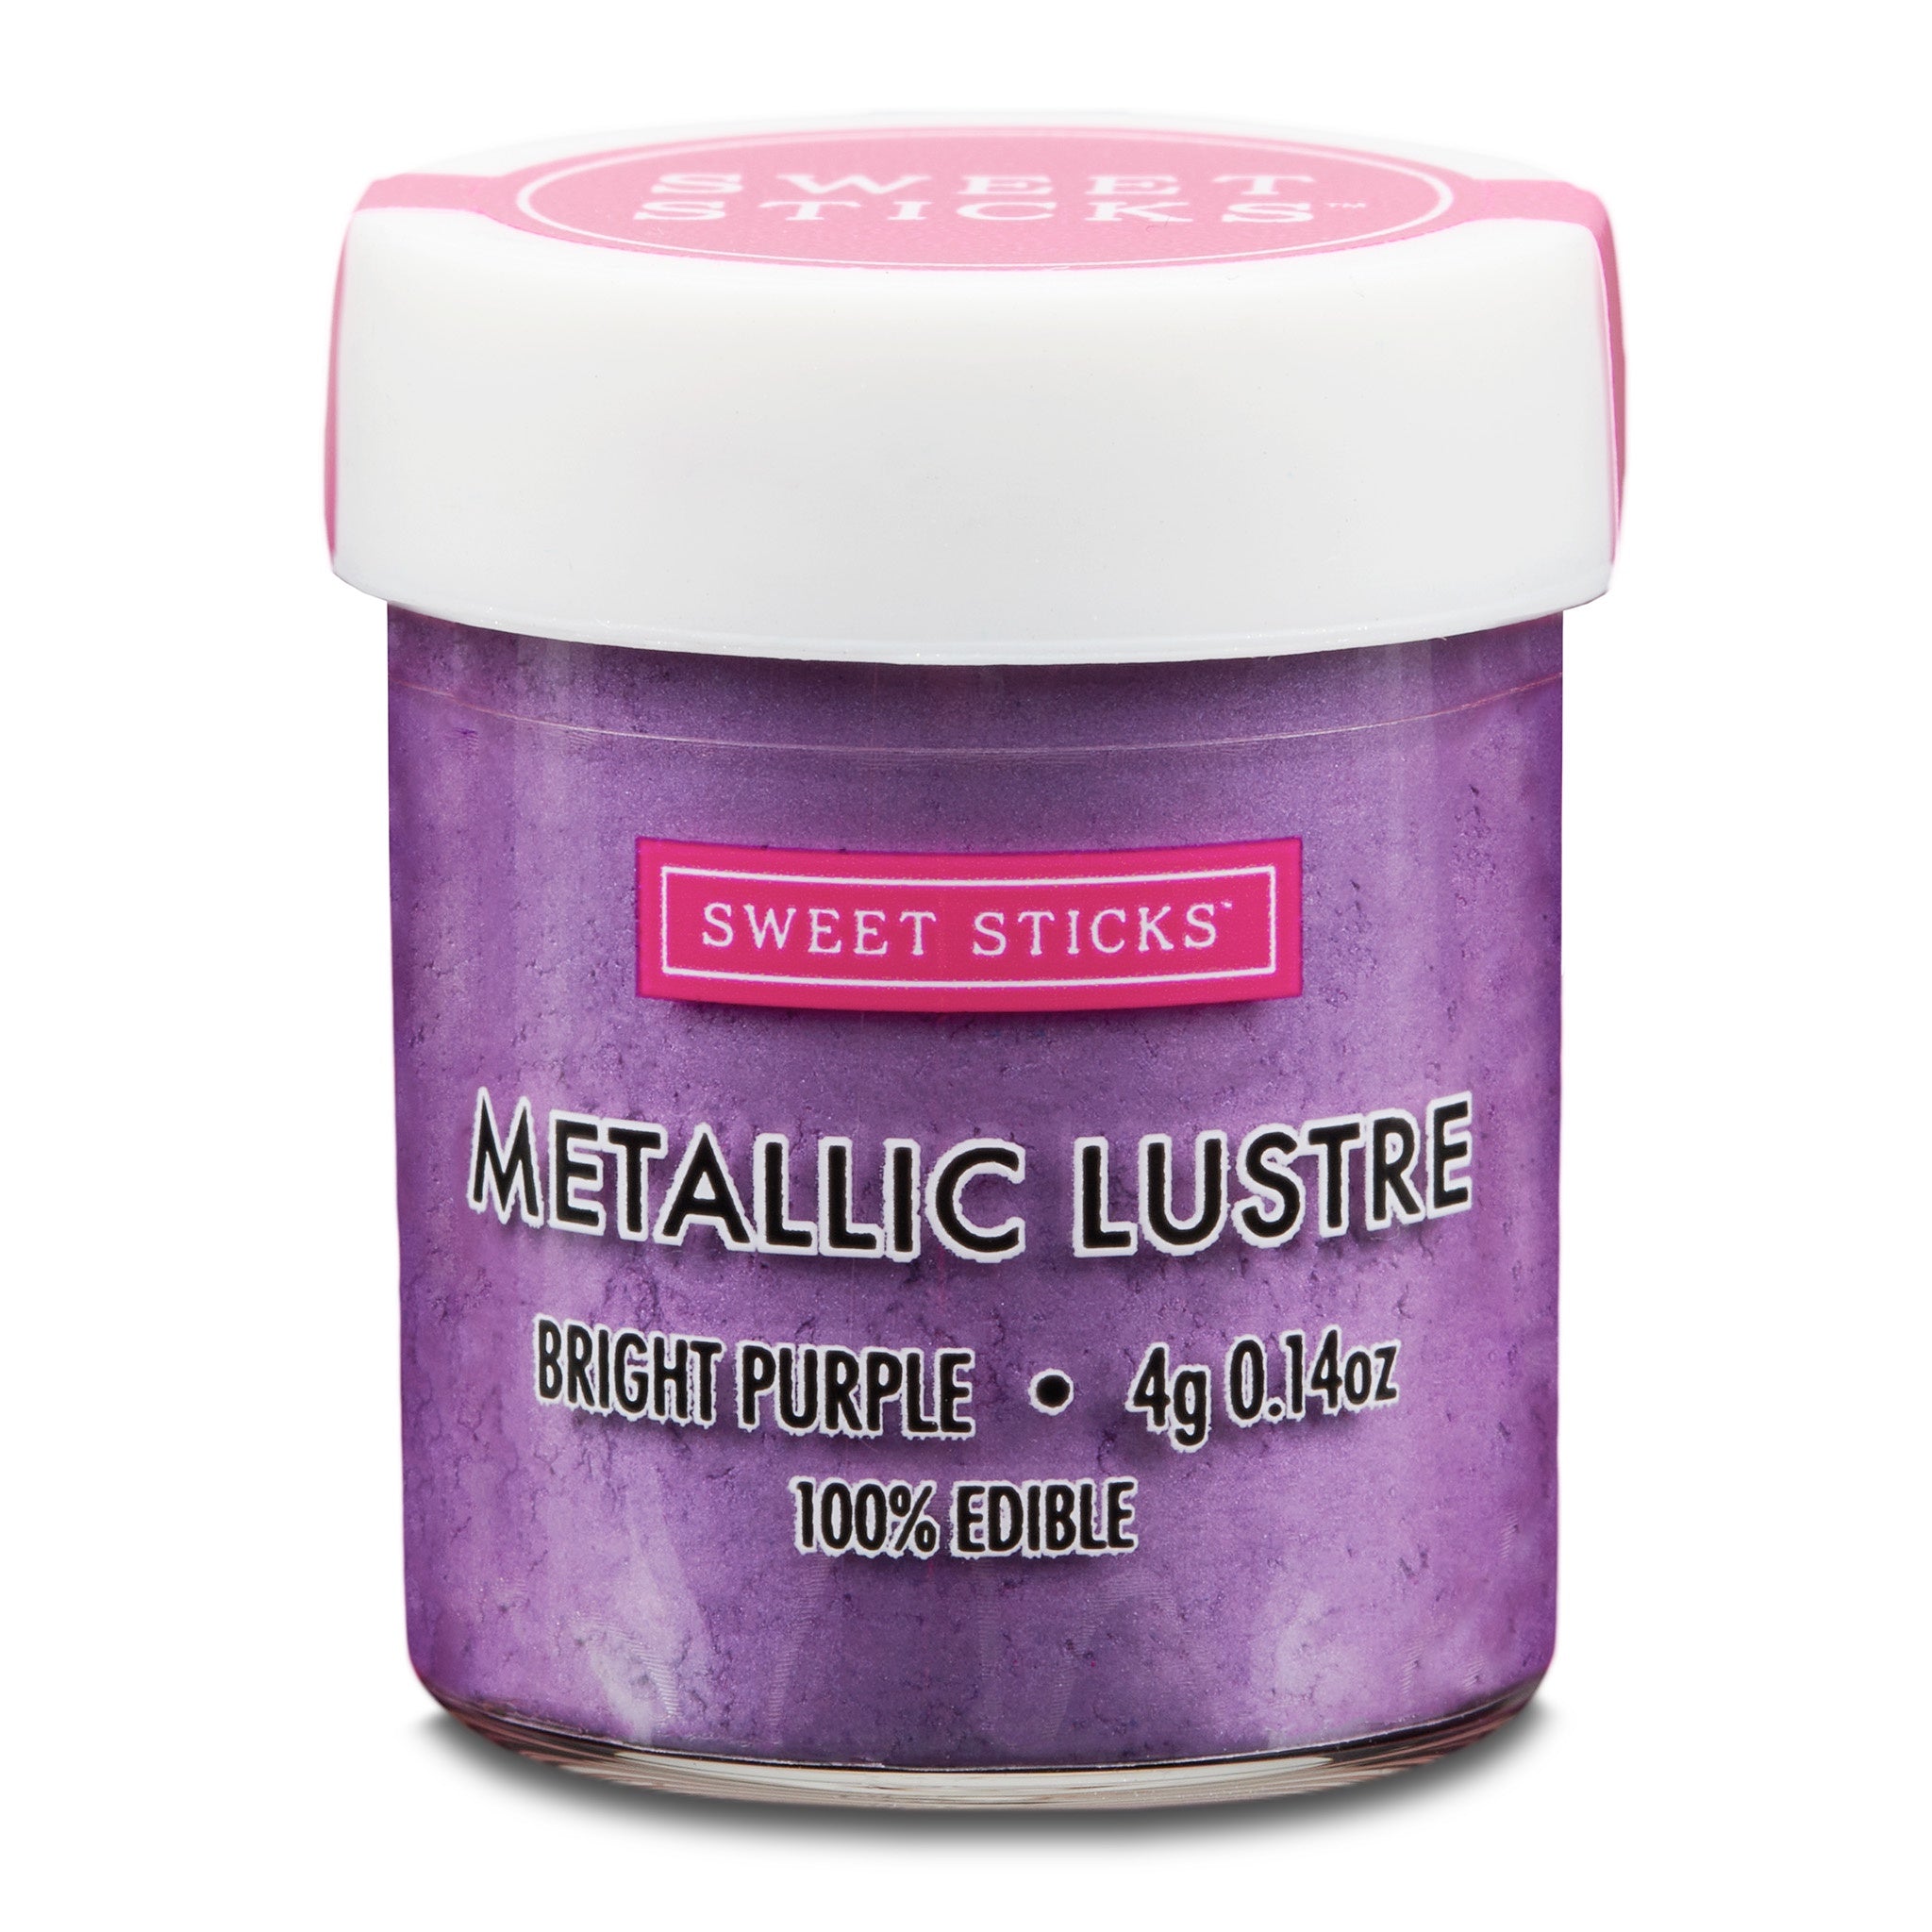 Sweet Sticks Metallic Lustre 4g - Bright Purple